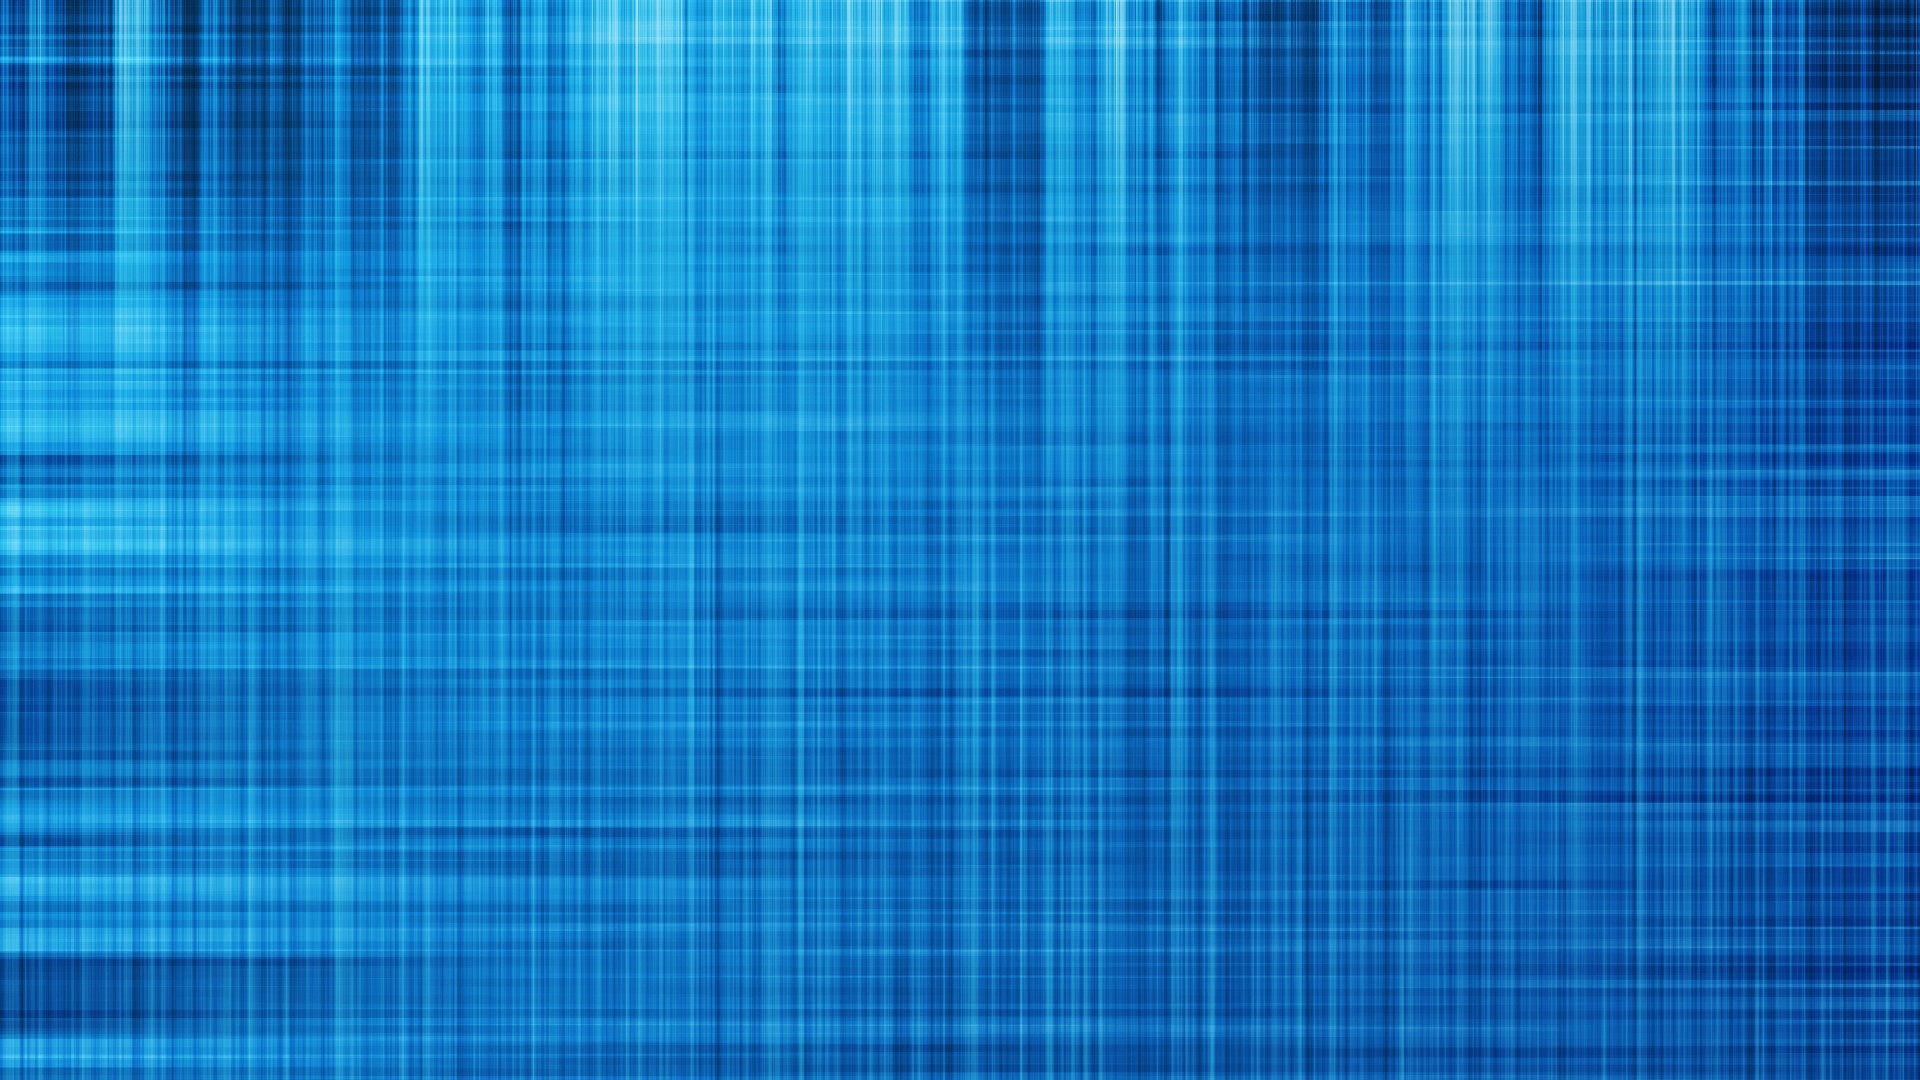 blue wallpaper textures images 1920x1080